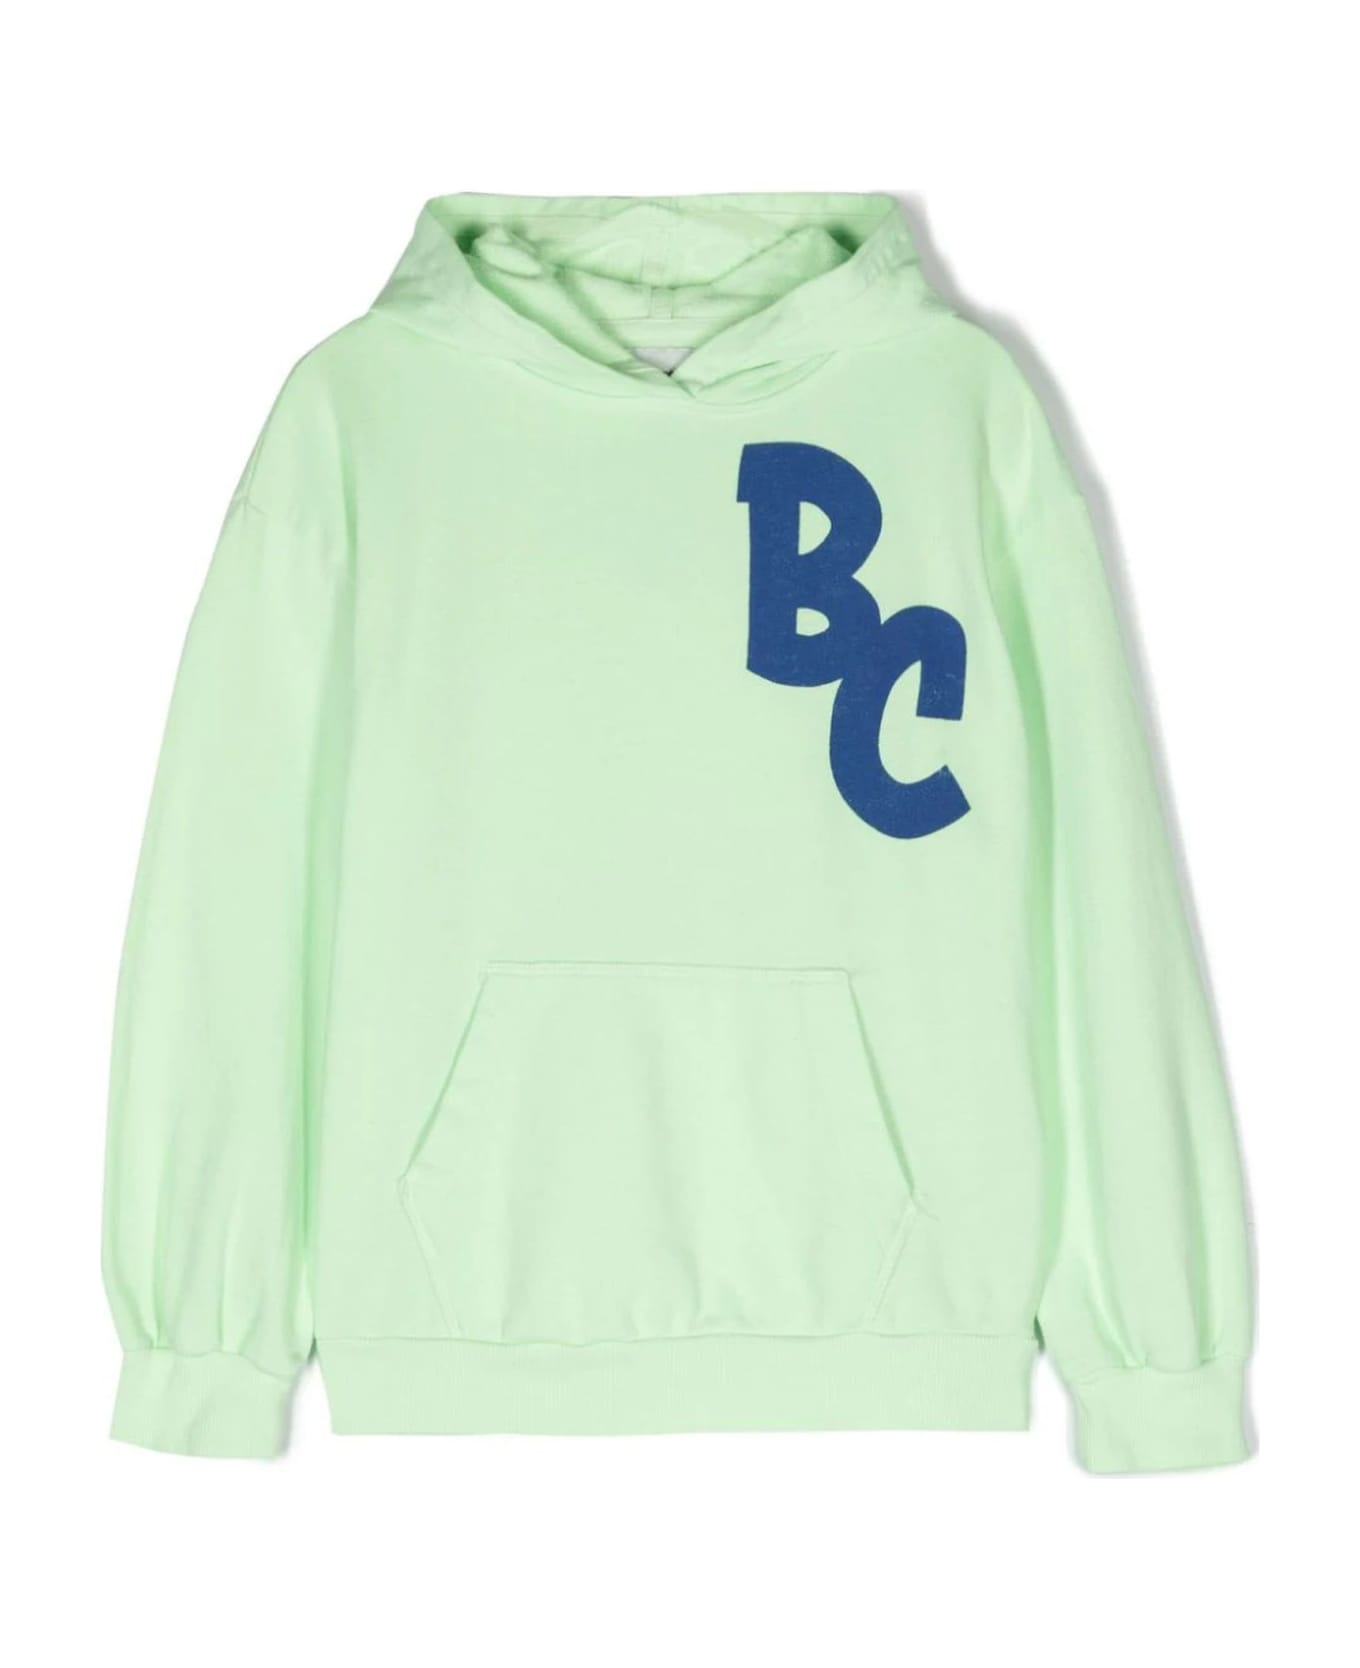 Bobo Choses Sweaters Green - Green ニットウェア＆スウェットシャツ